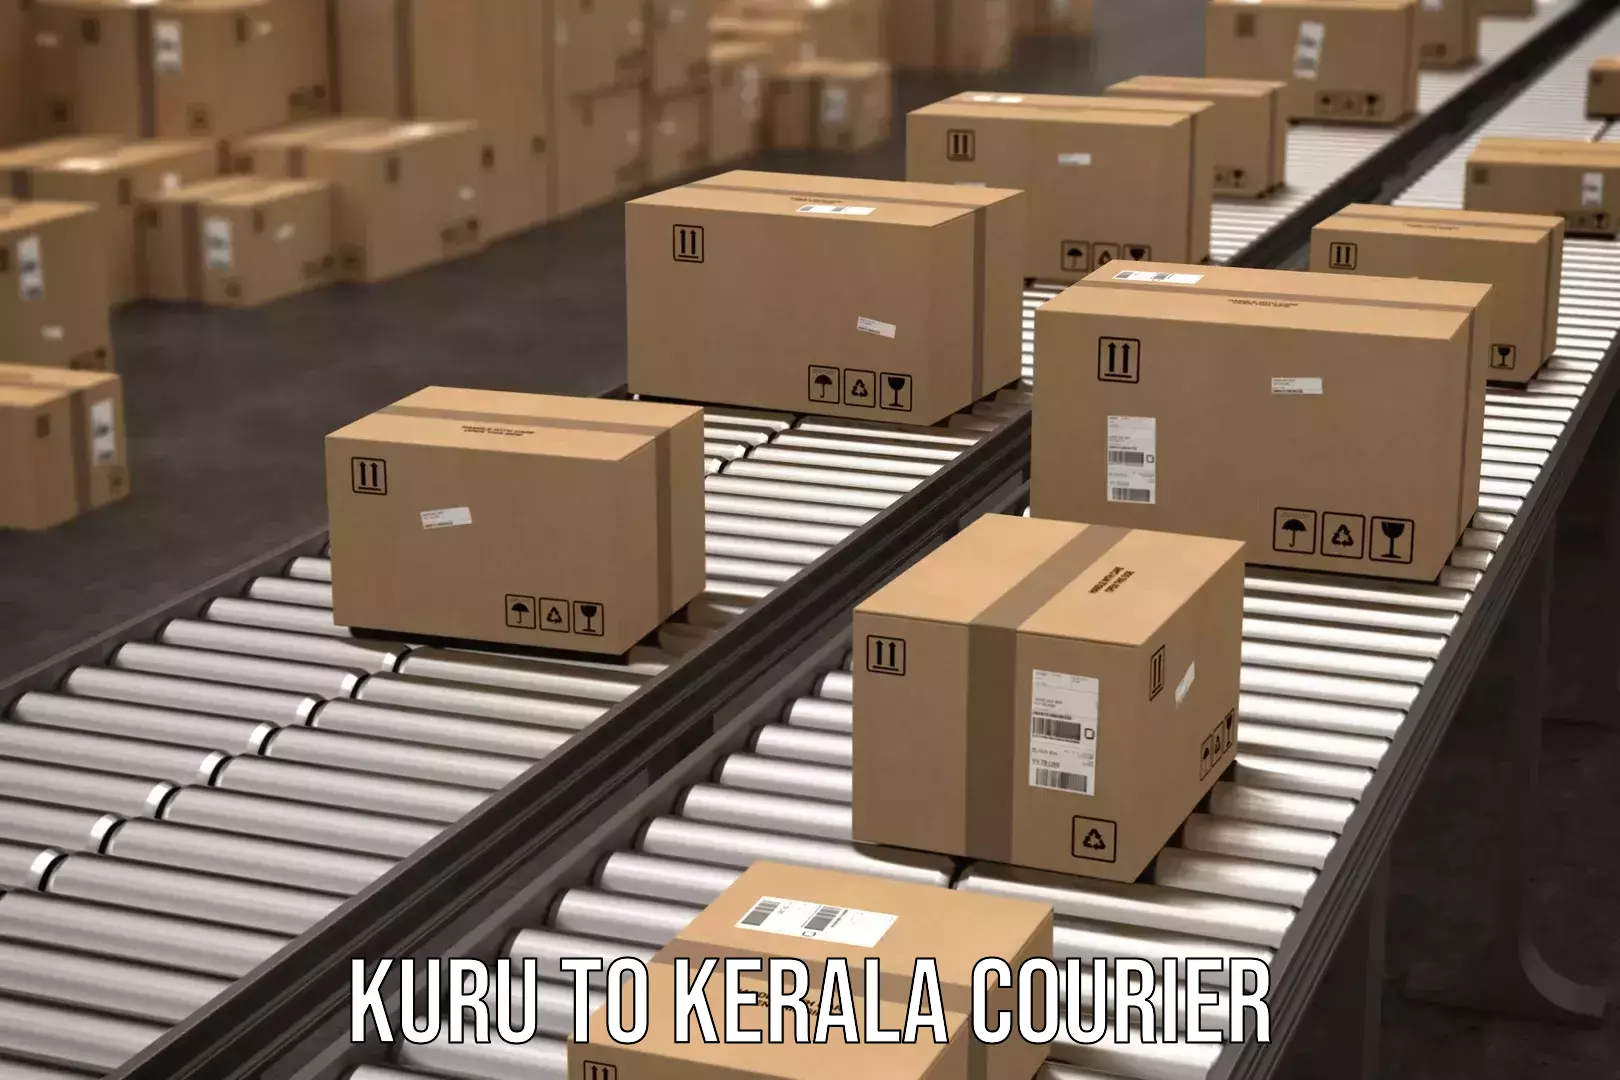 Rural area delivery Kuru to Kerala